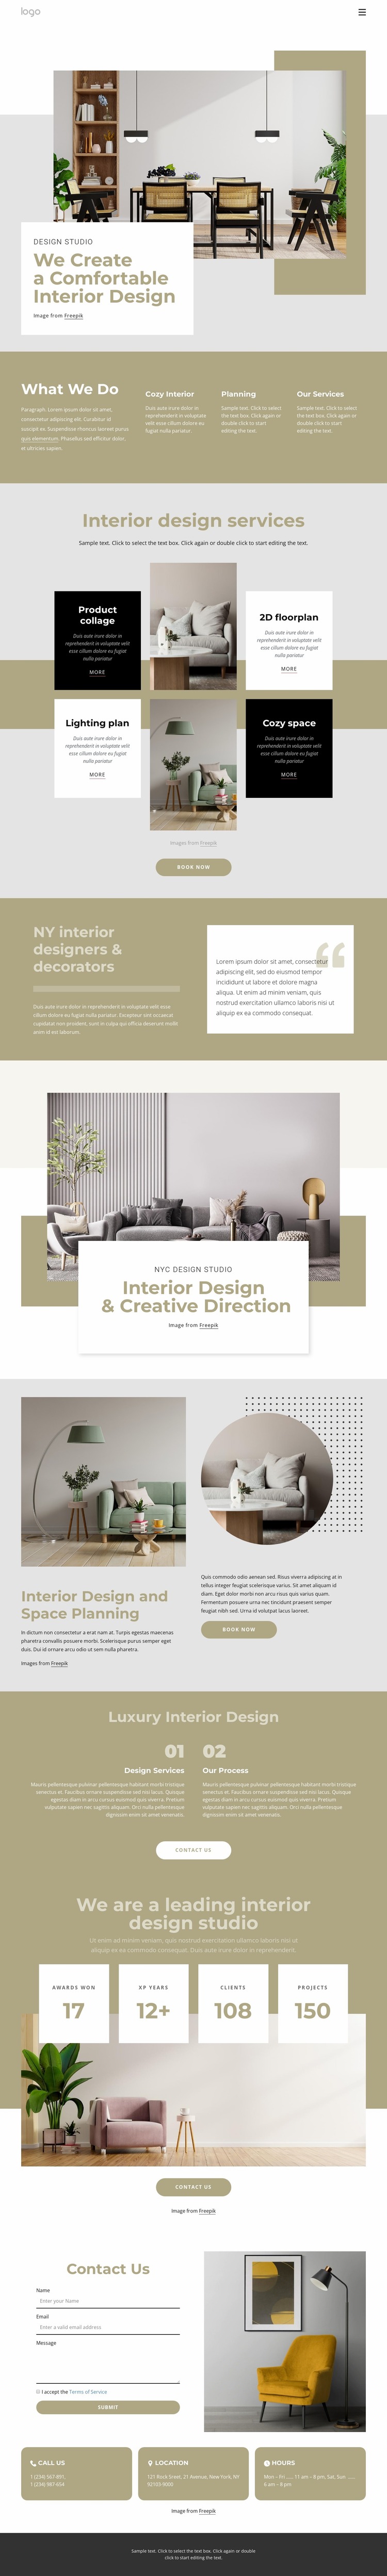 We create a comfortable interiors Website Mockup